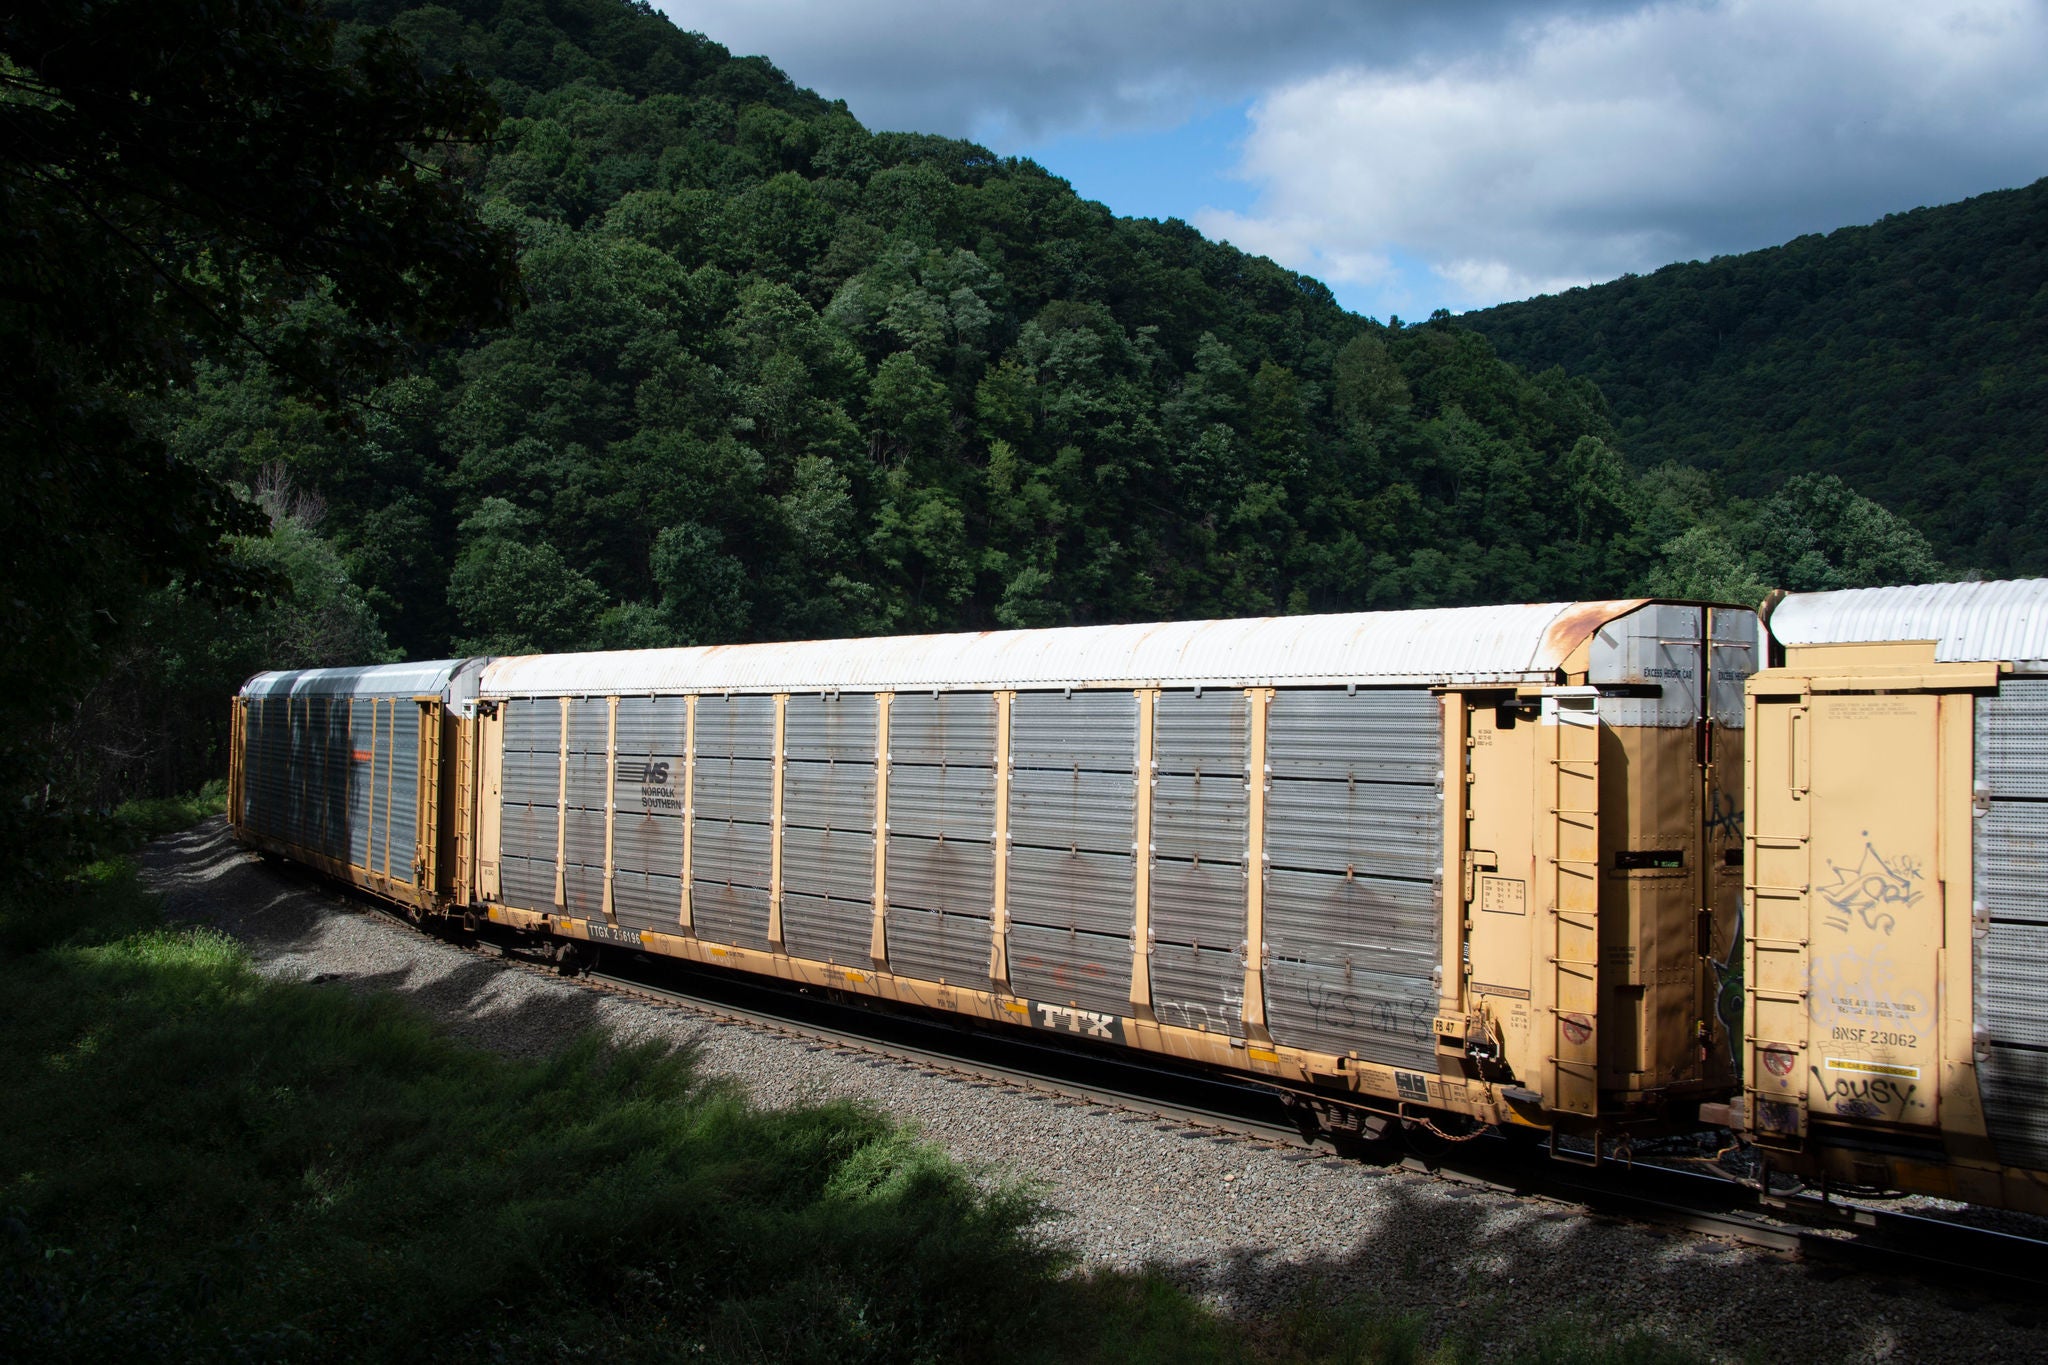 Tri Level train car for shipping equipment